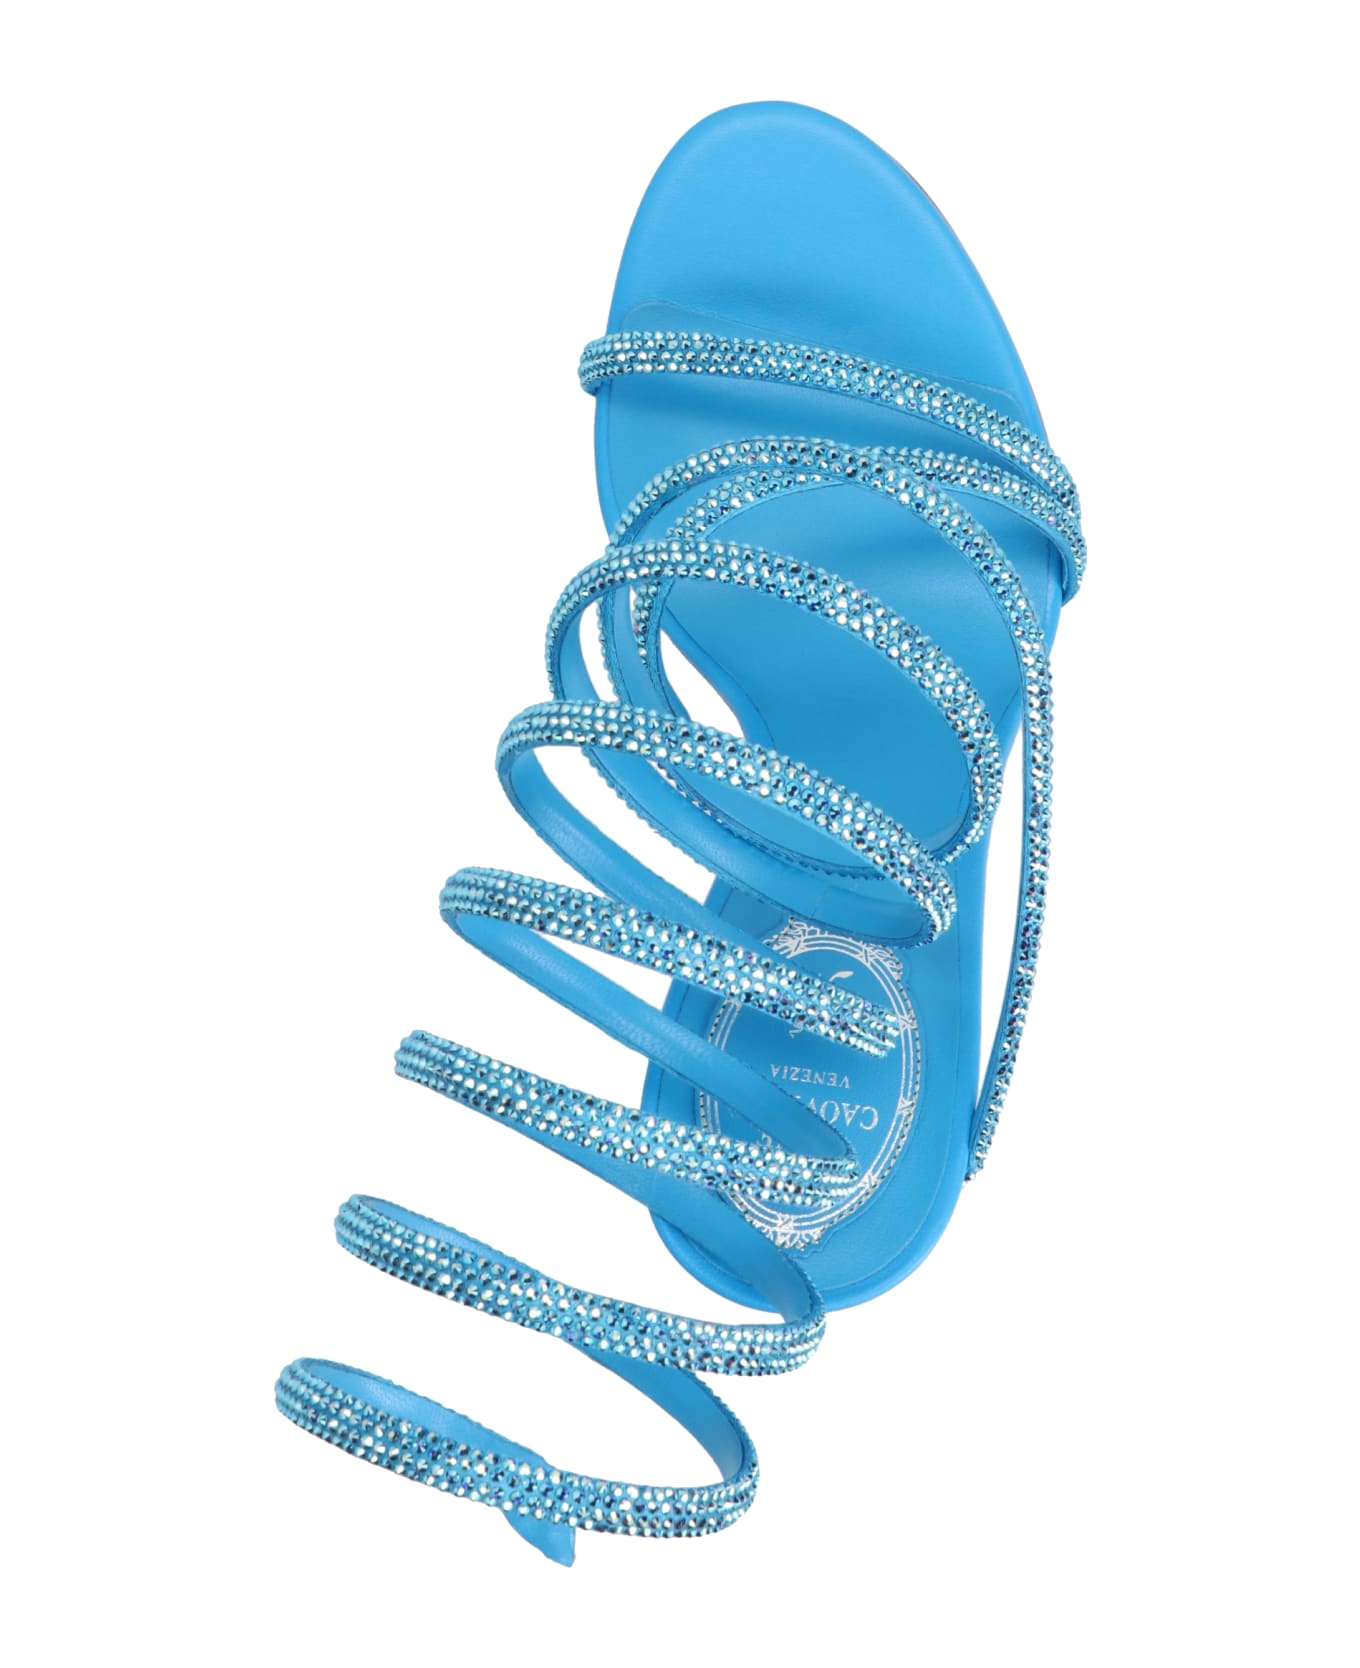 René Caovilla 'margot Sandals - Light Blue